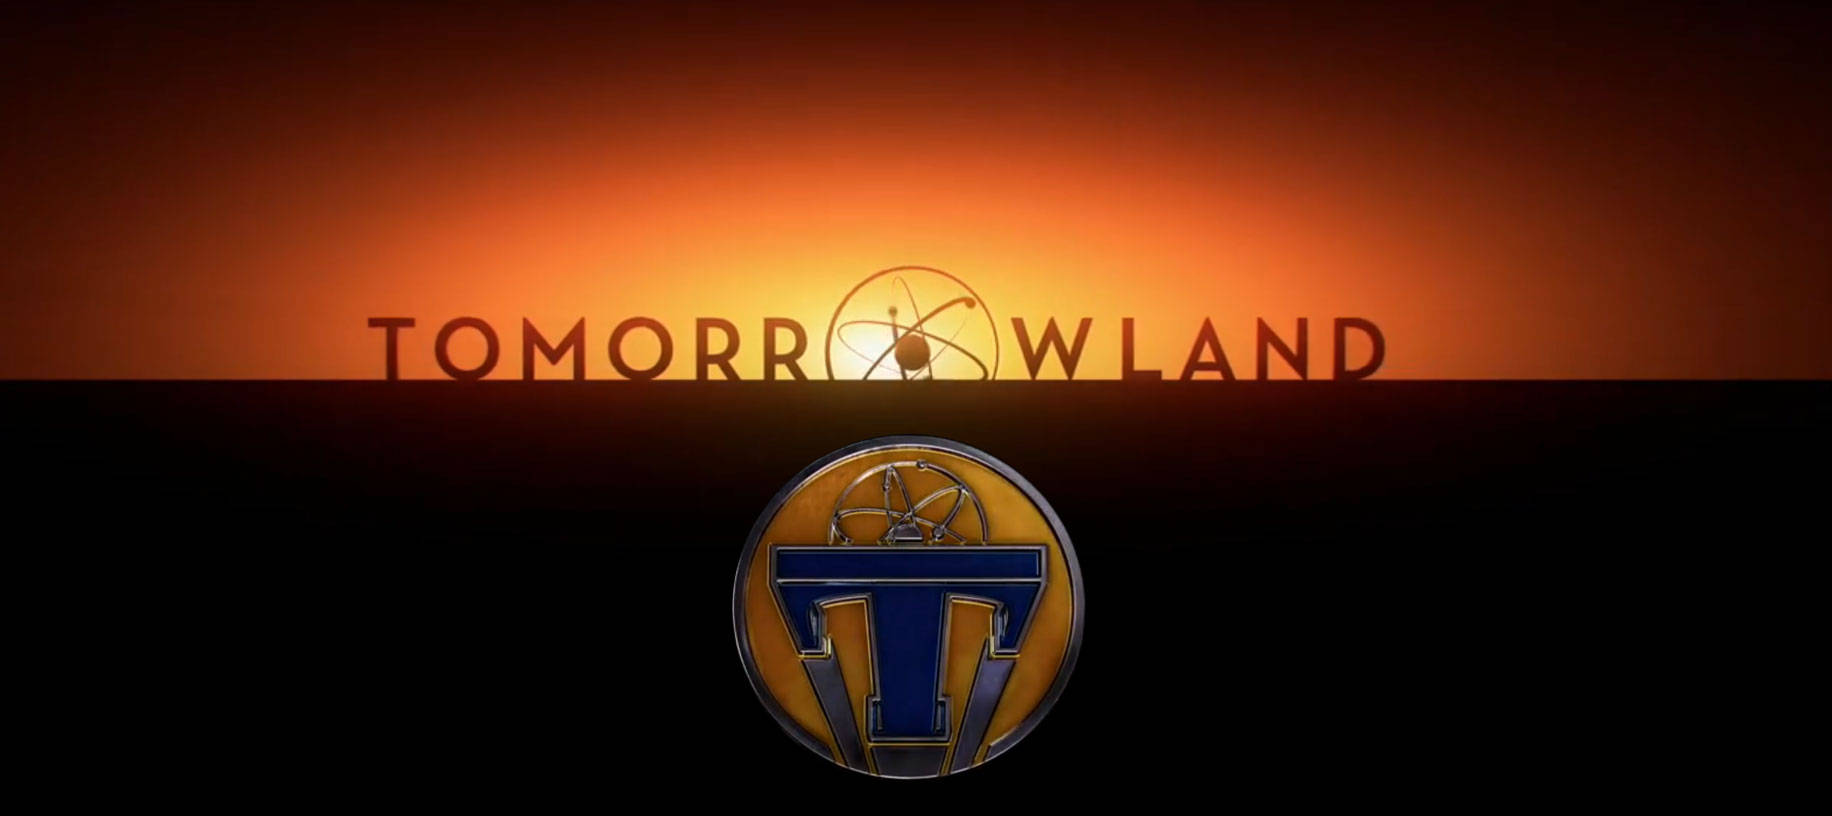 Tapet Tomorrowland Movie Monogram Poster: “Fremhæv dit tilskueråndskab for filmen Tomorrowland med dette fantastiske, minimalistiske monogram tapet!” Wallpaper